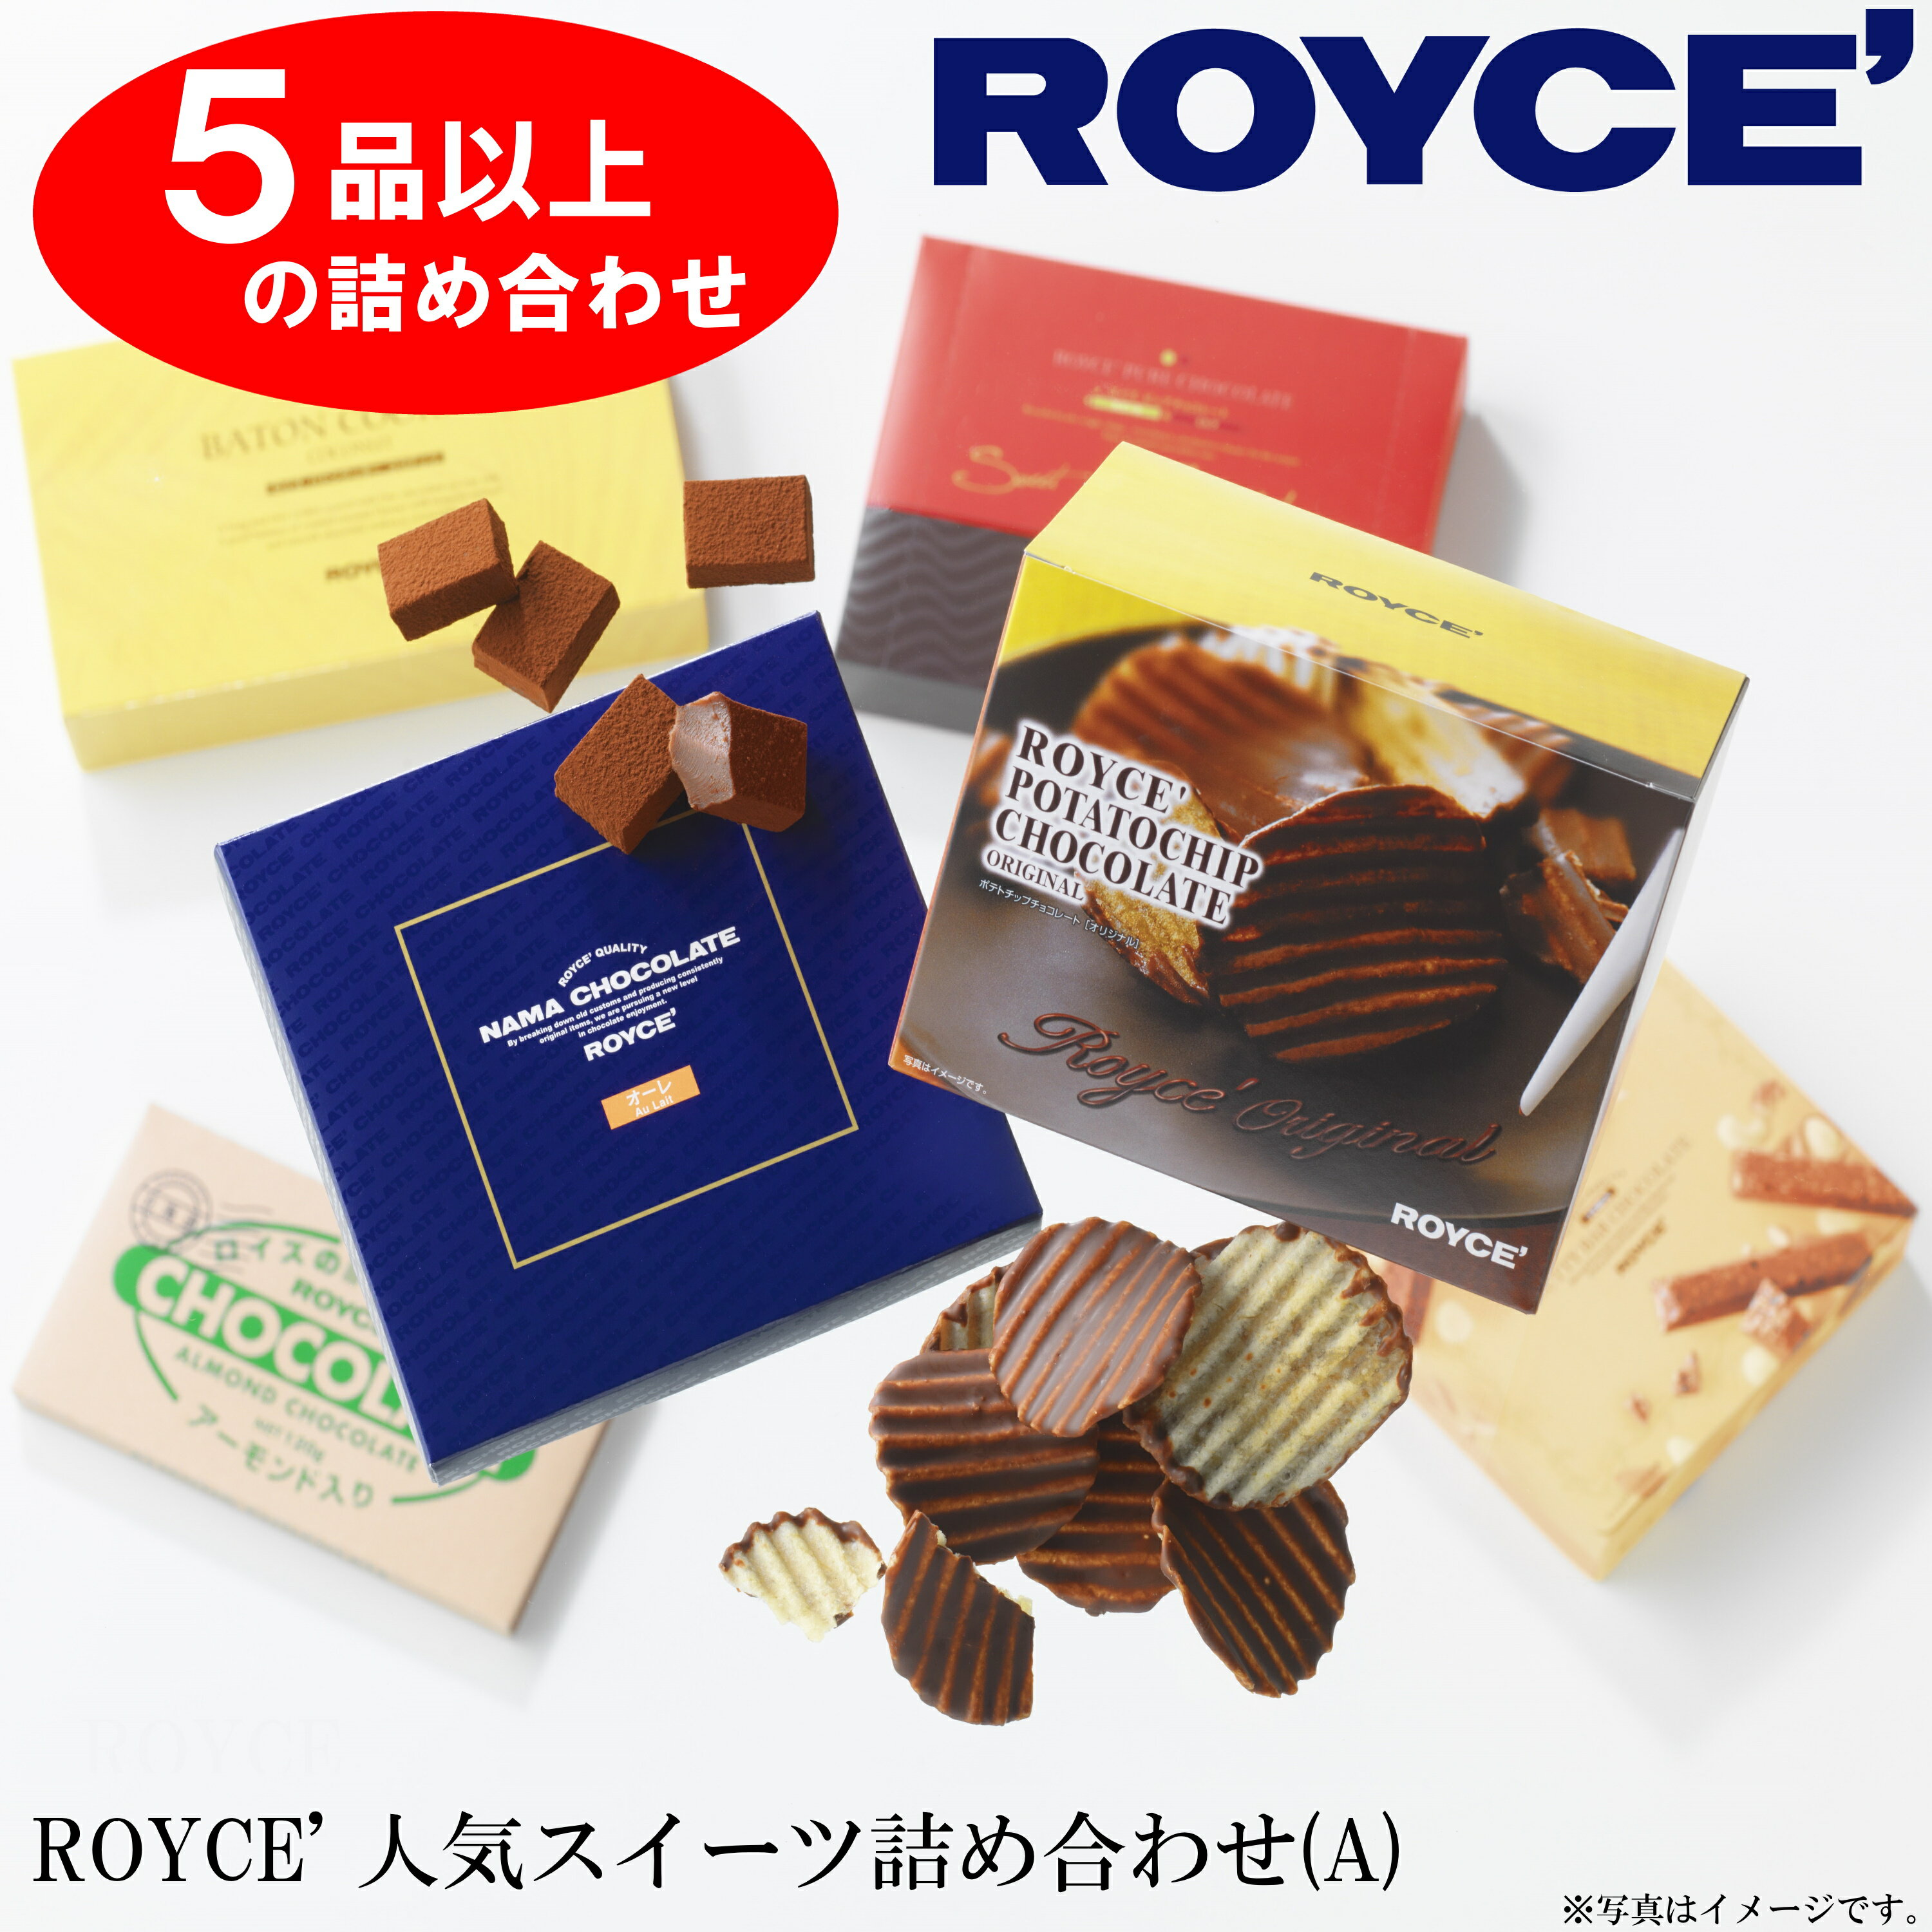 ROYCE'人気スイーツ詰合せ(A)